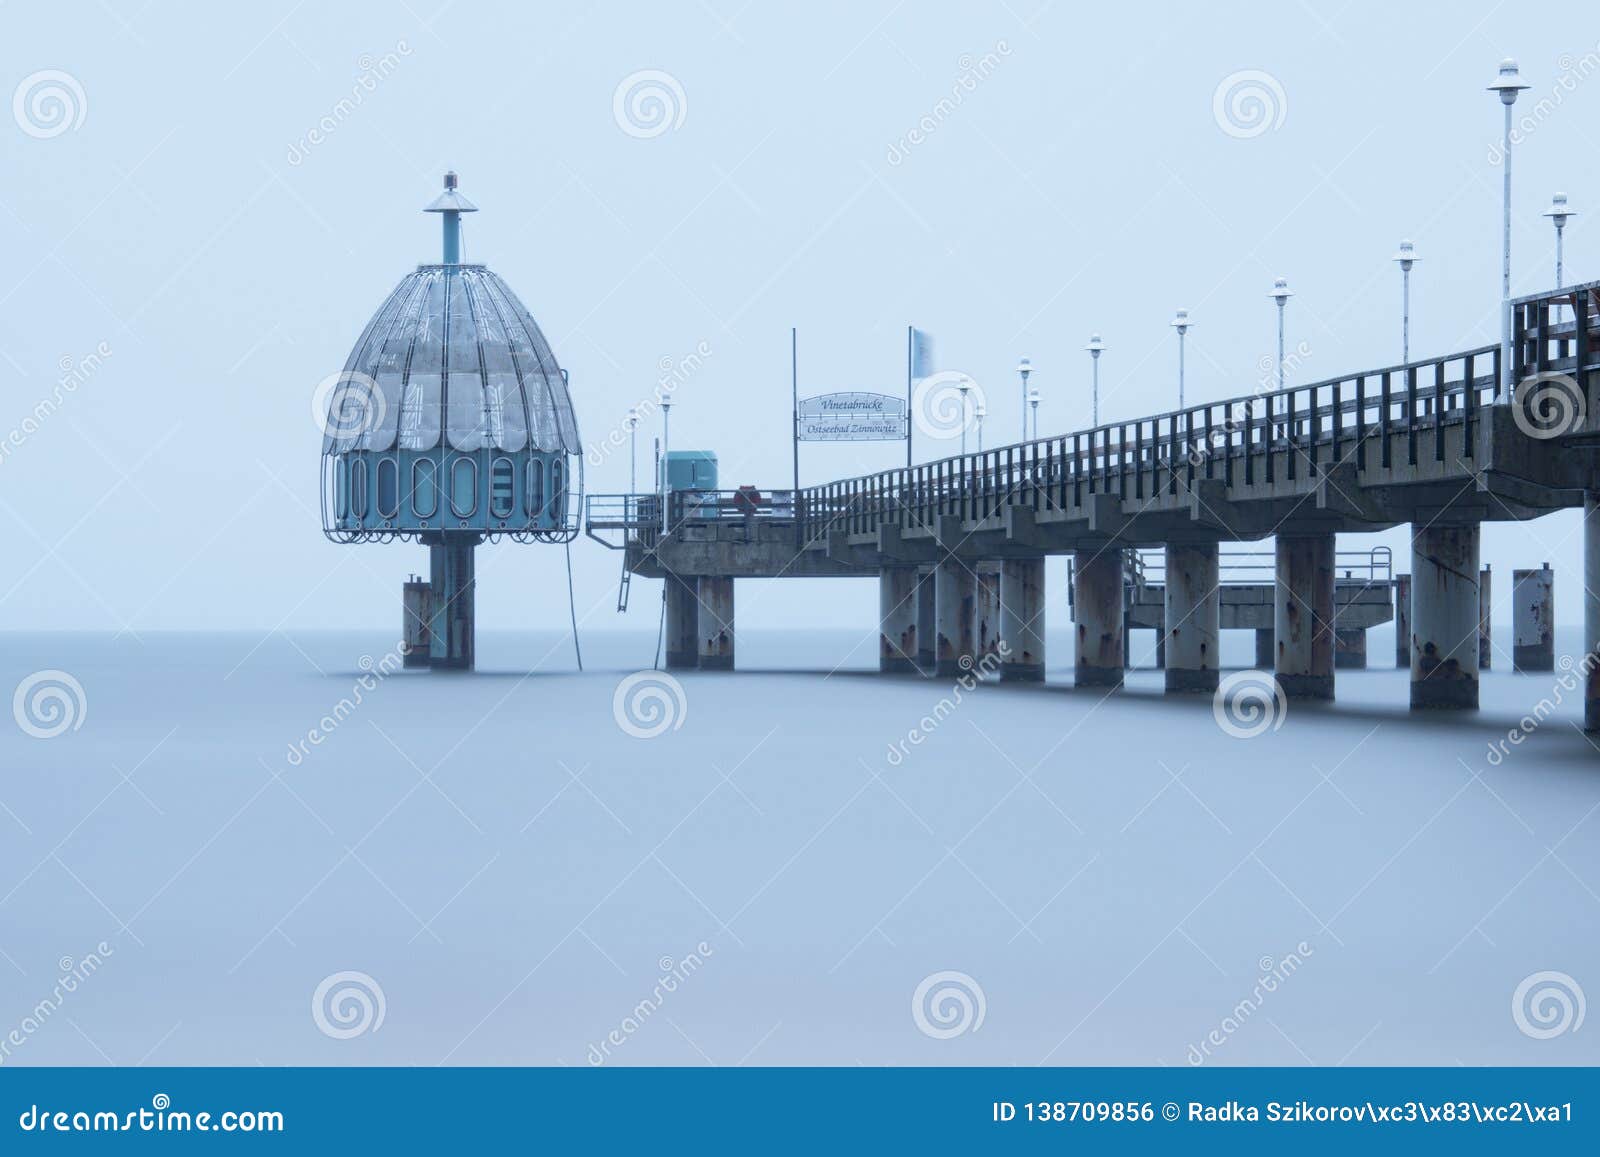 zinnowitz sea bridge